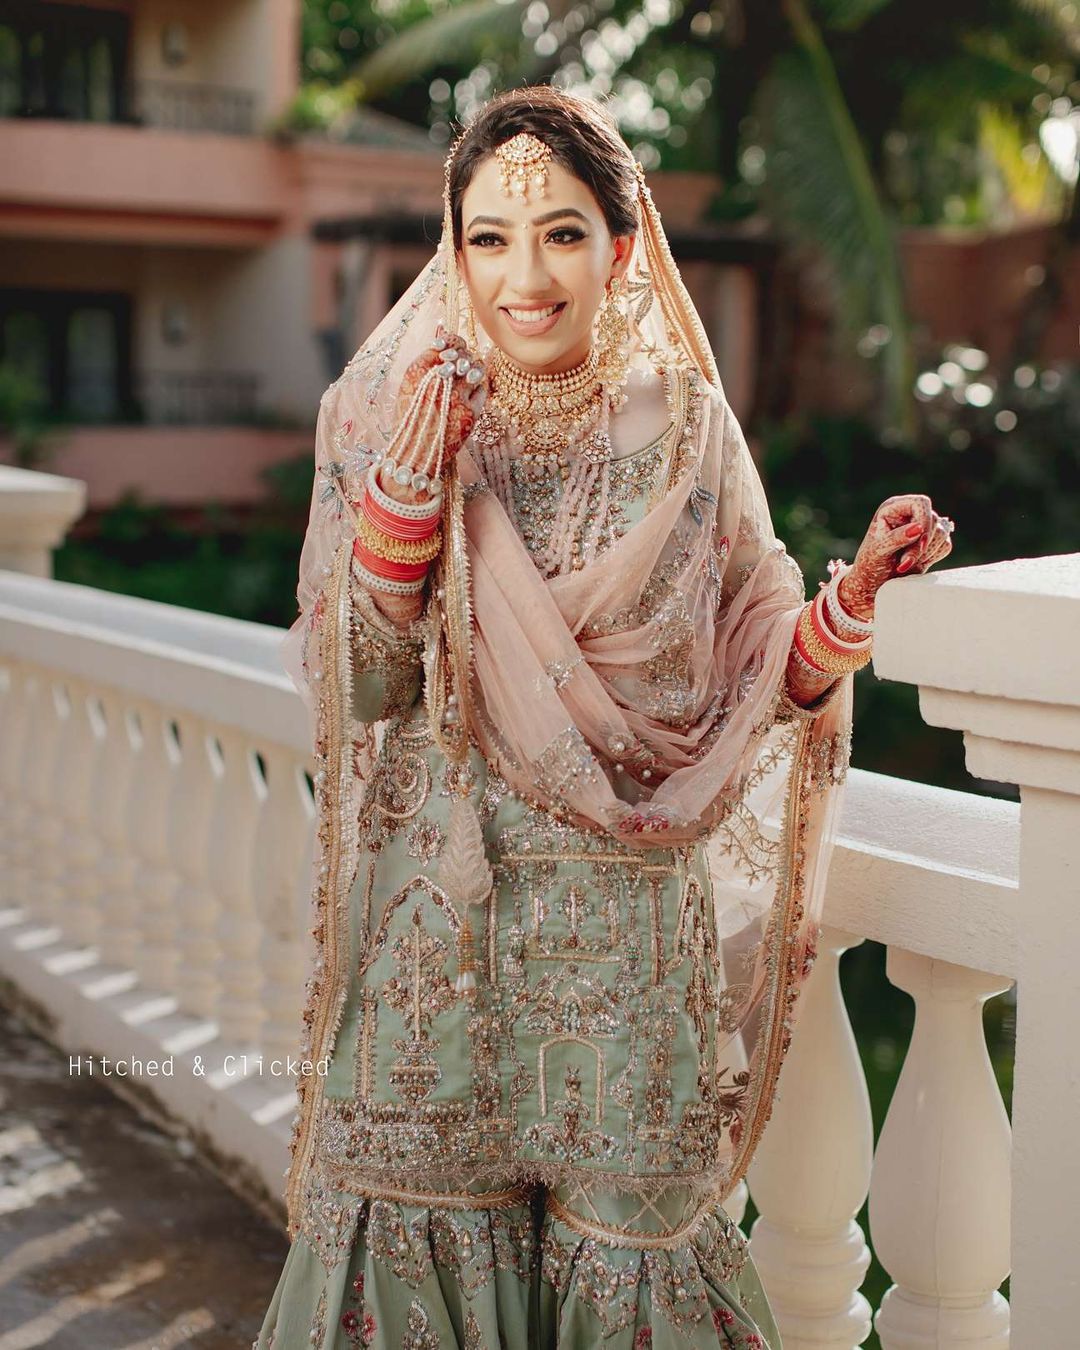 Punjabi Wedding Dresses Ideas for an Ideal Bride and Groom! | Latest bridal  dresses, Bridal dress fashion, Fashion sketches dresses